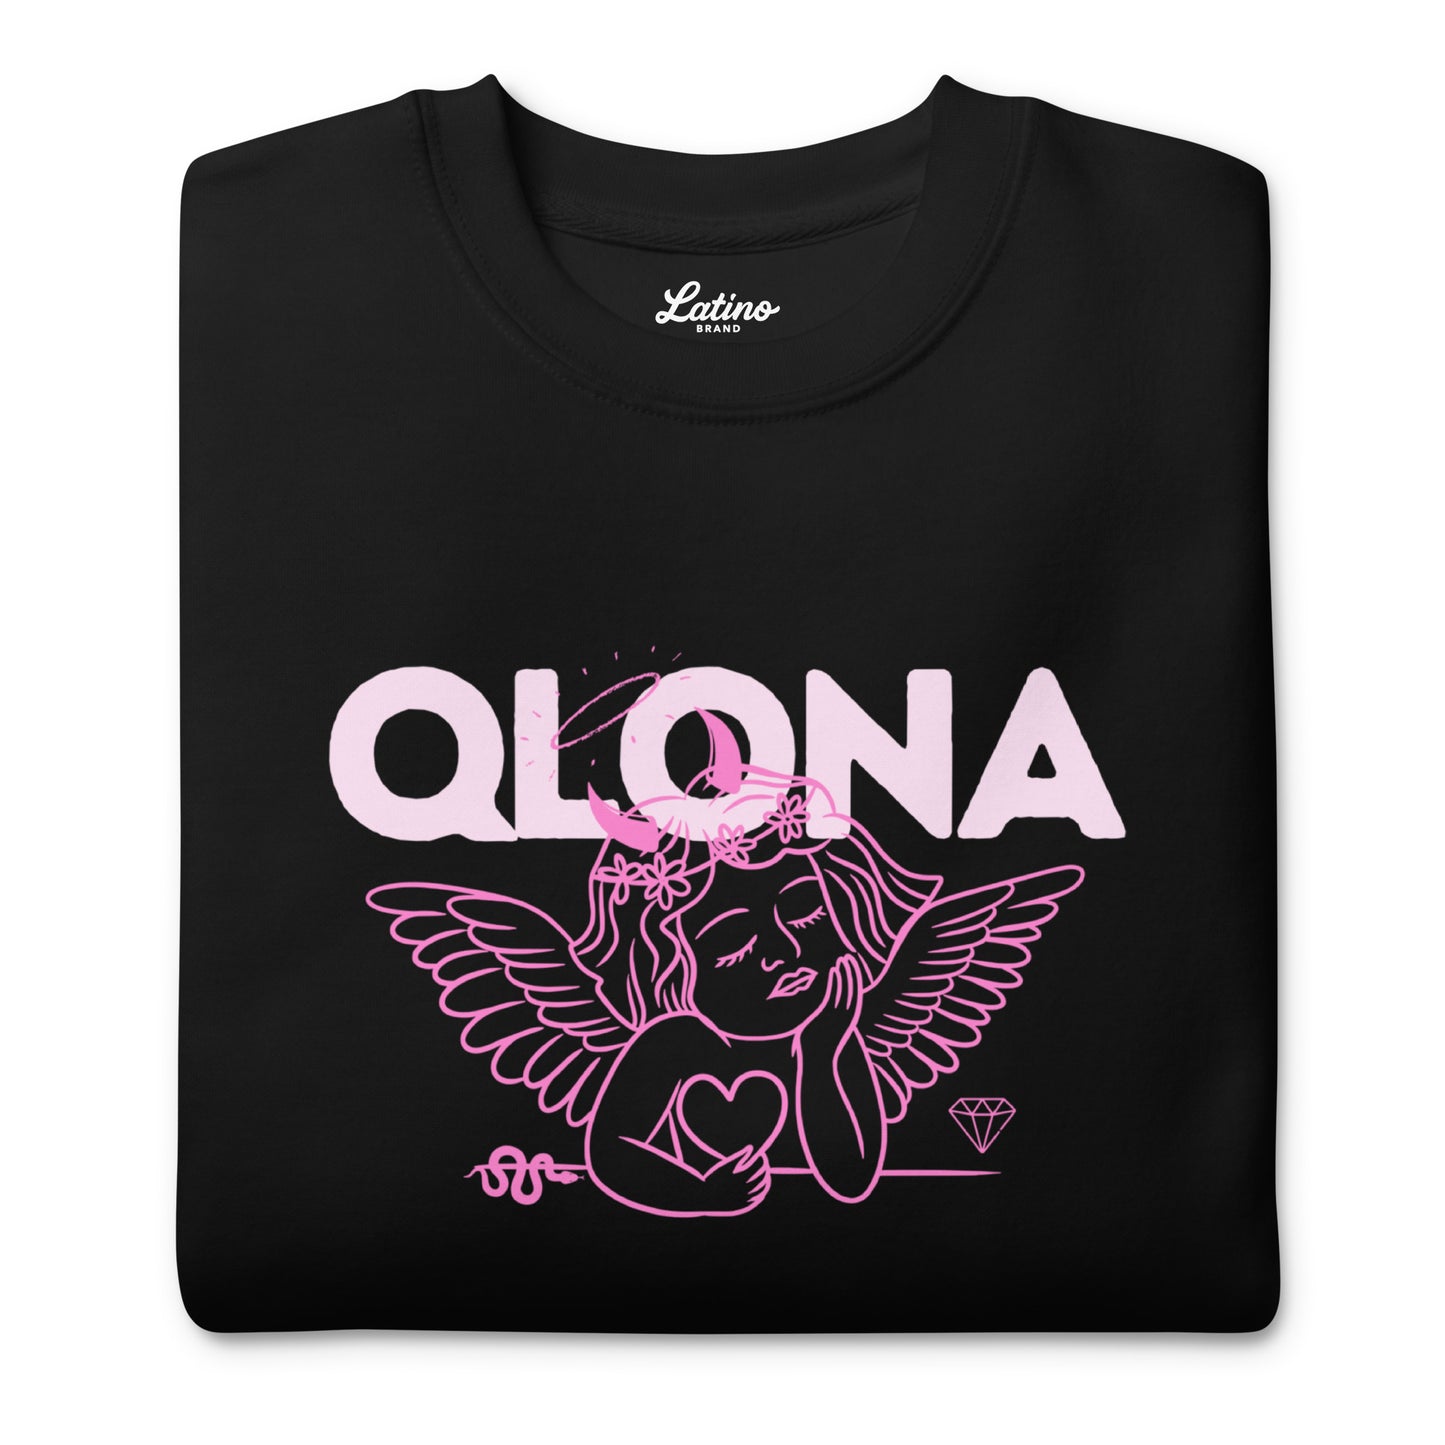 QLONA Premium Sweatshirt